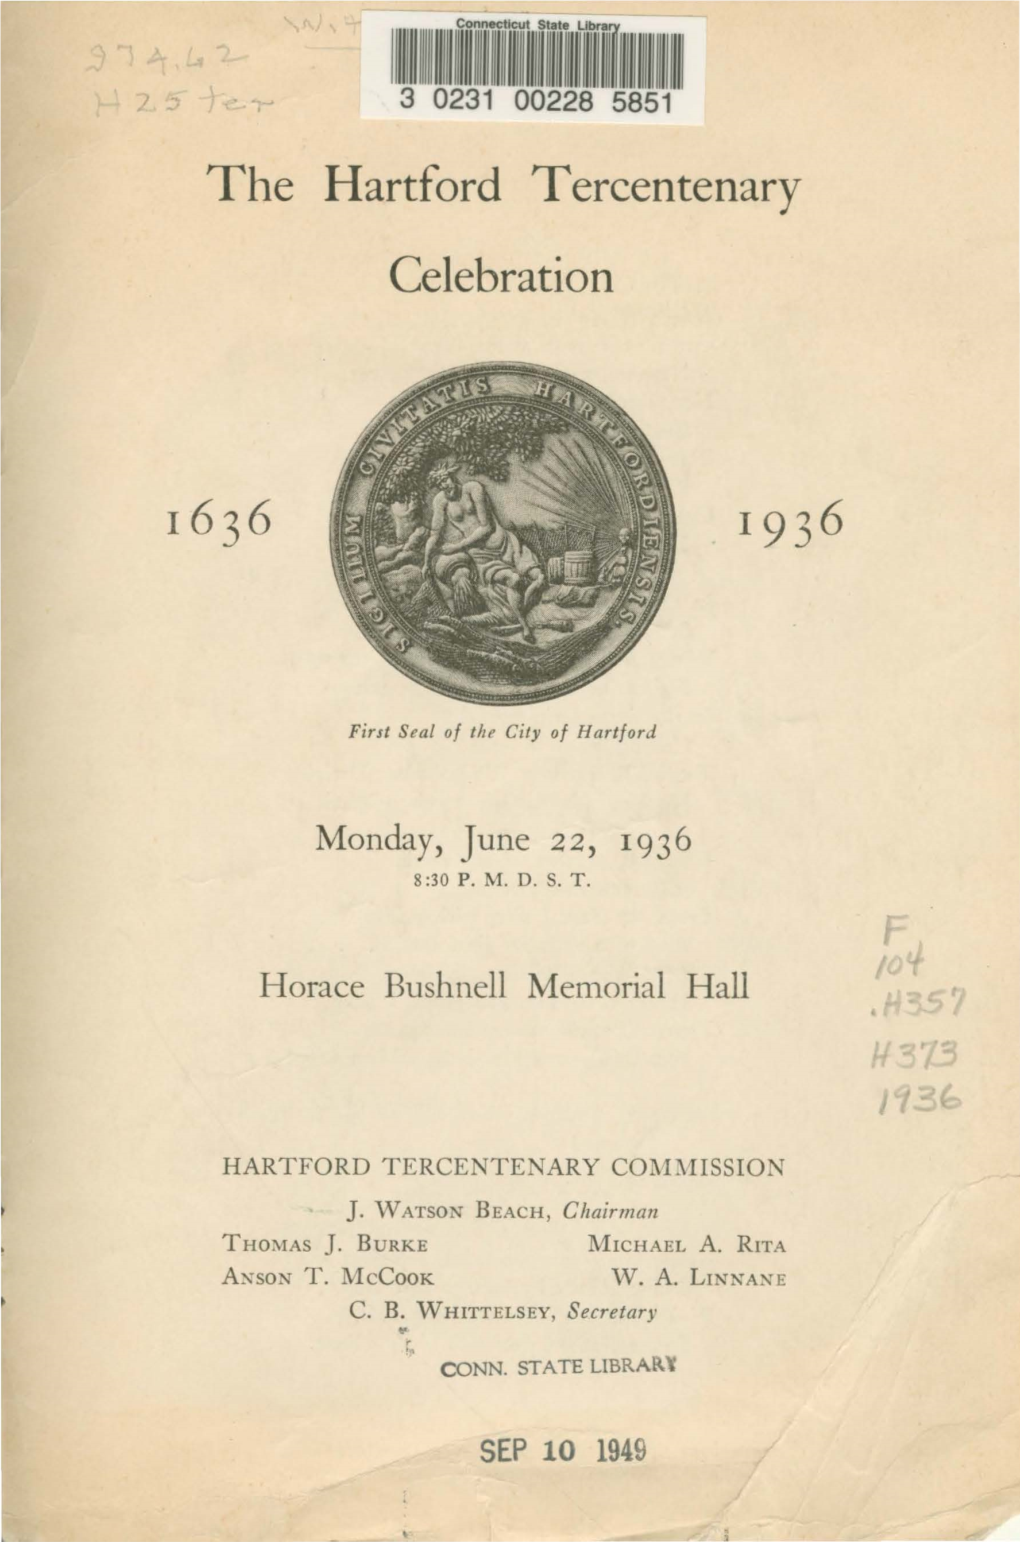 The Hartford Tercentenary Celebration